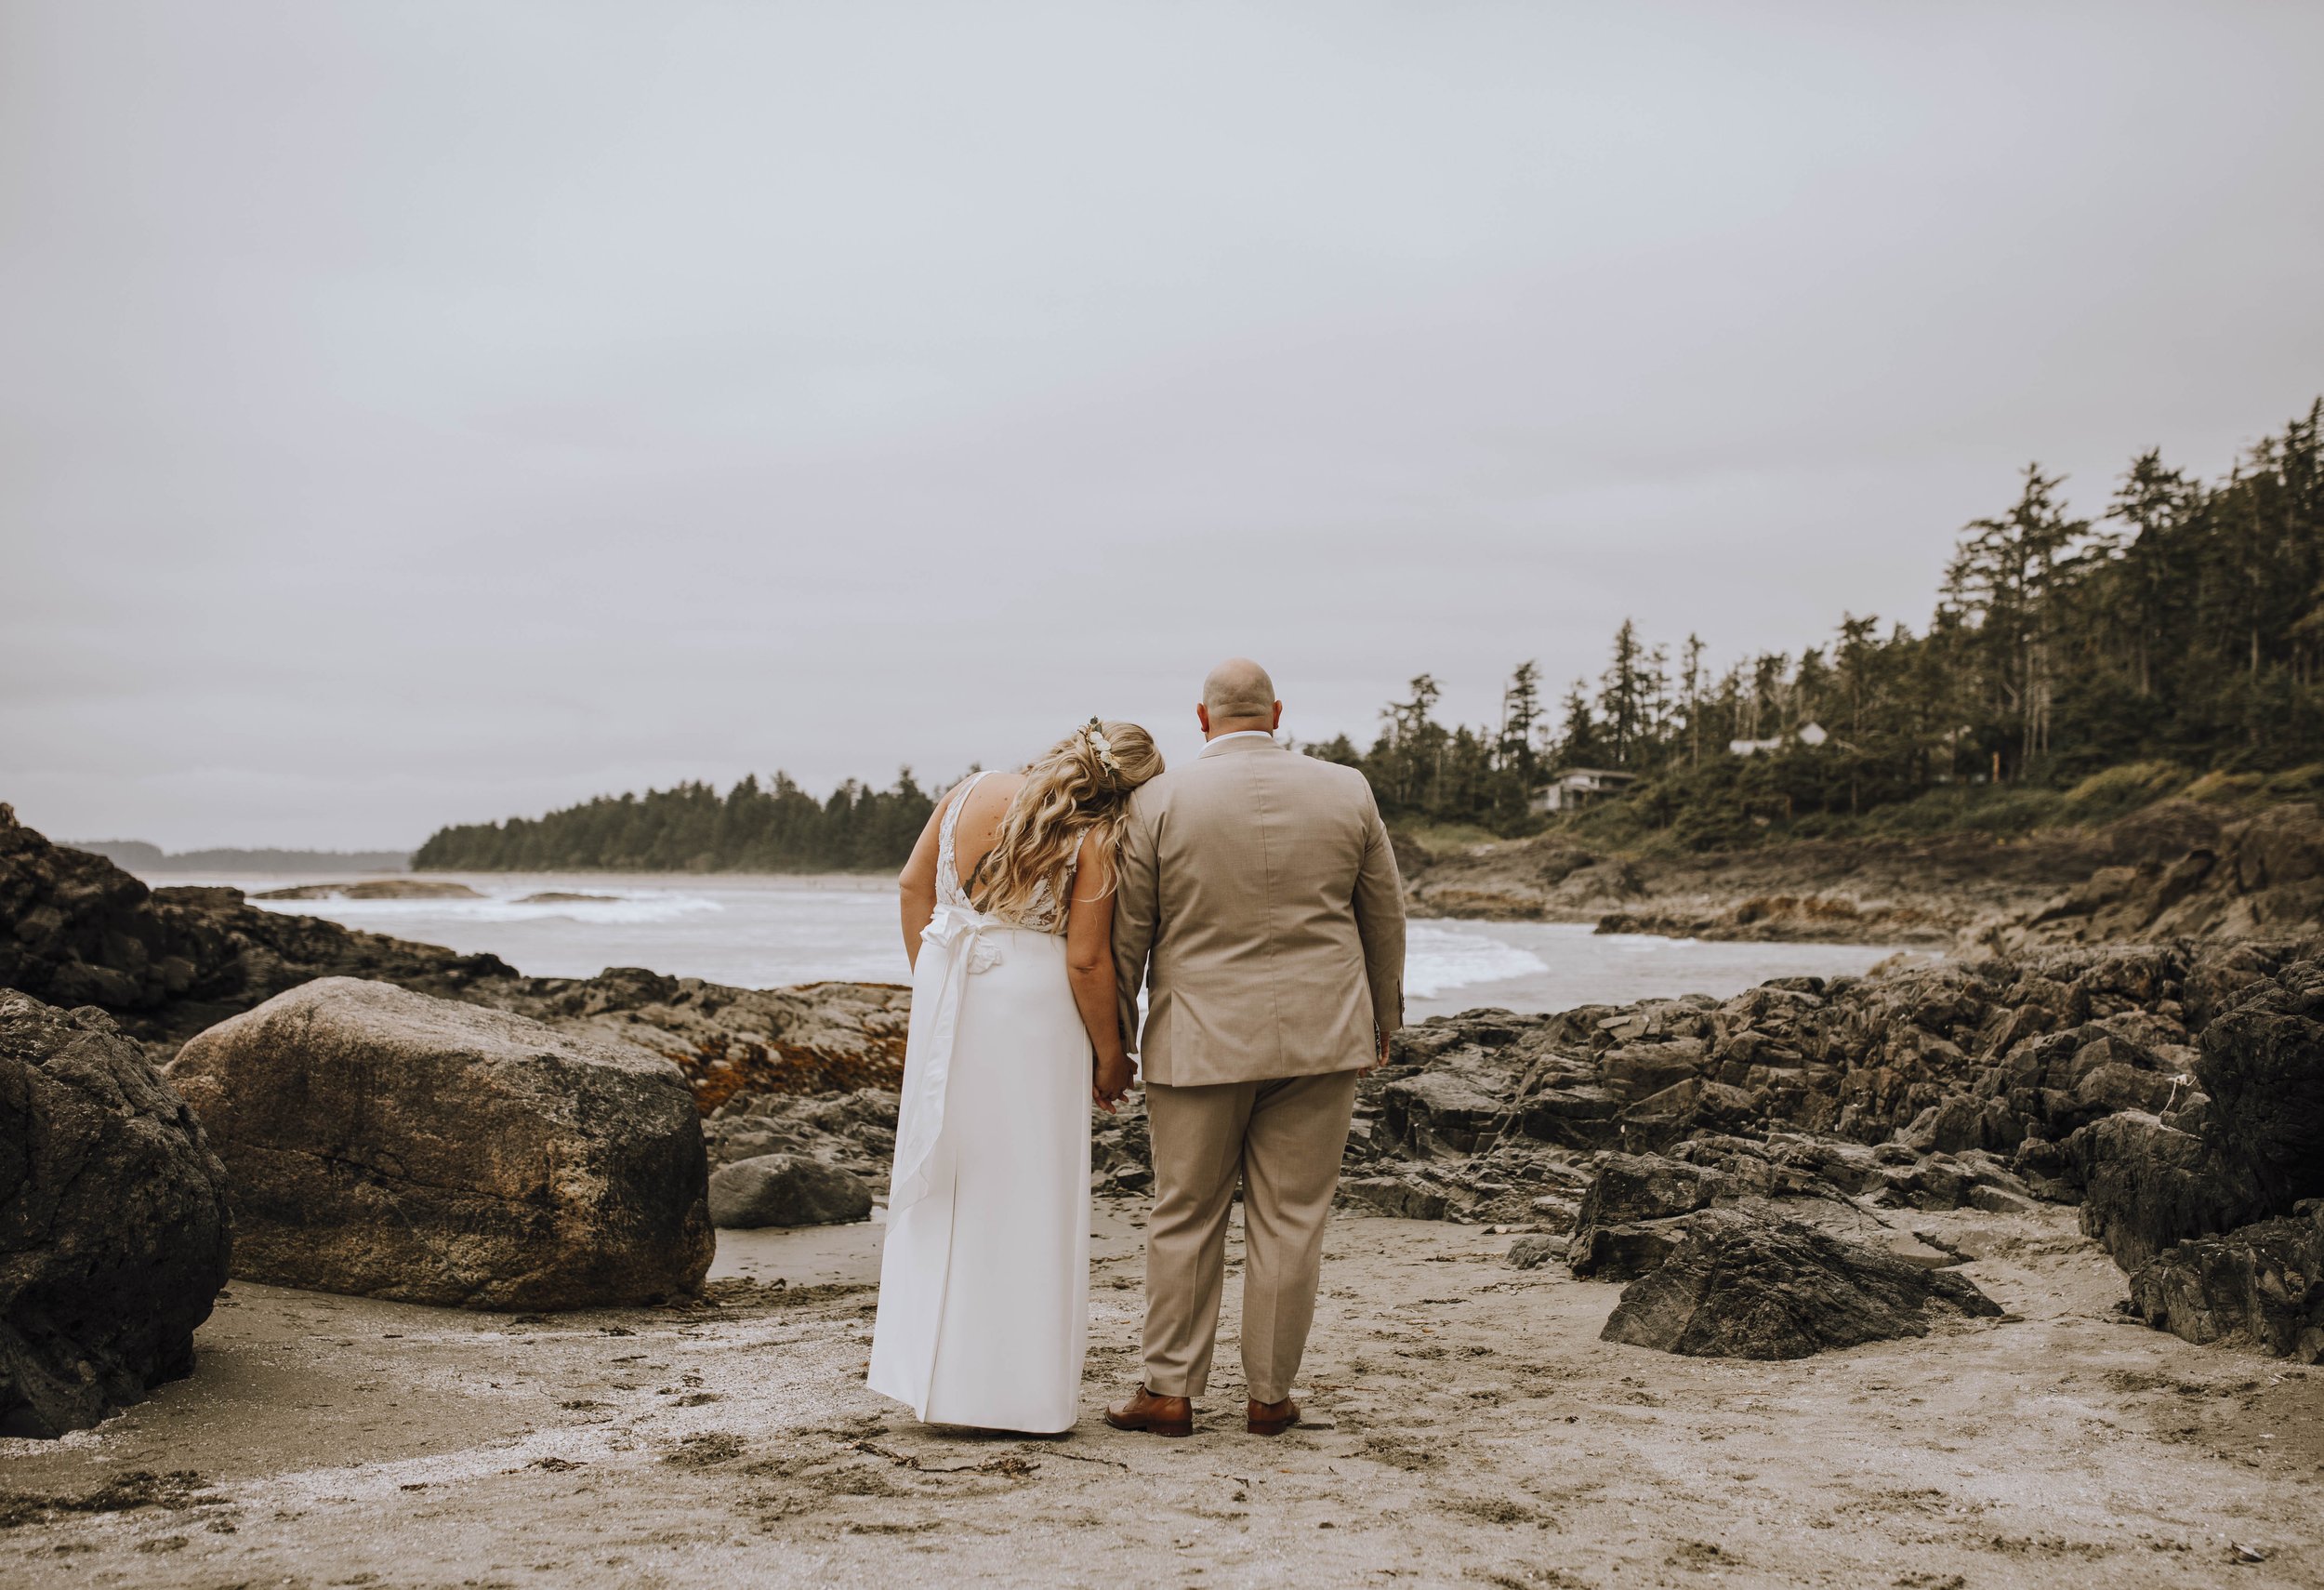 Jamie and Brad wedding - Tofino Vancouver Island British Columbia - Elyse Anna Photography-3384.jpg